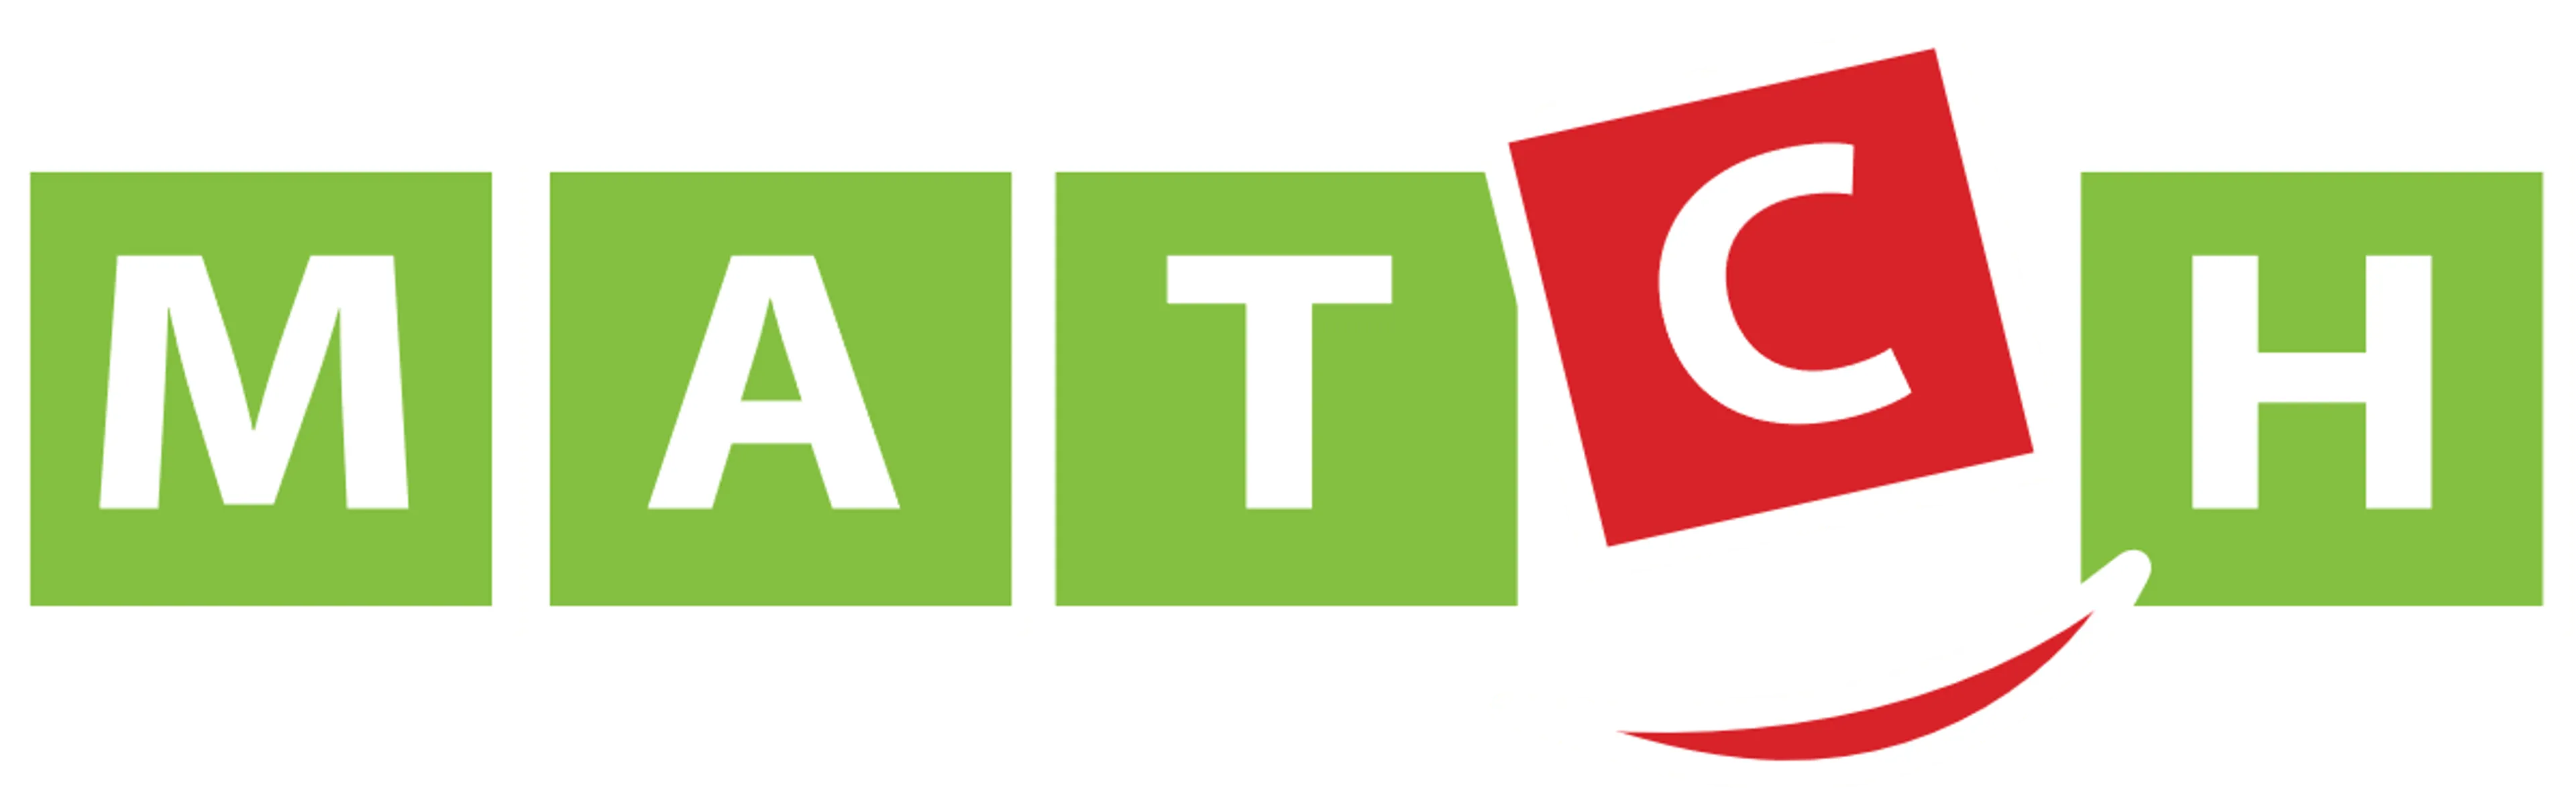 MATCH logo